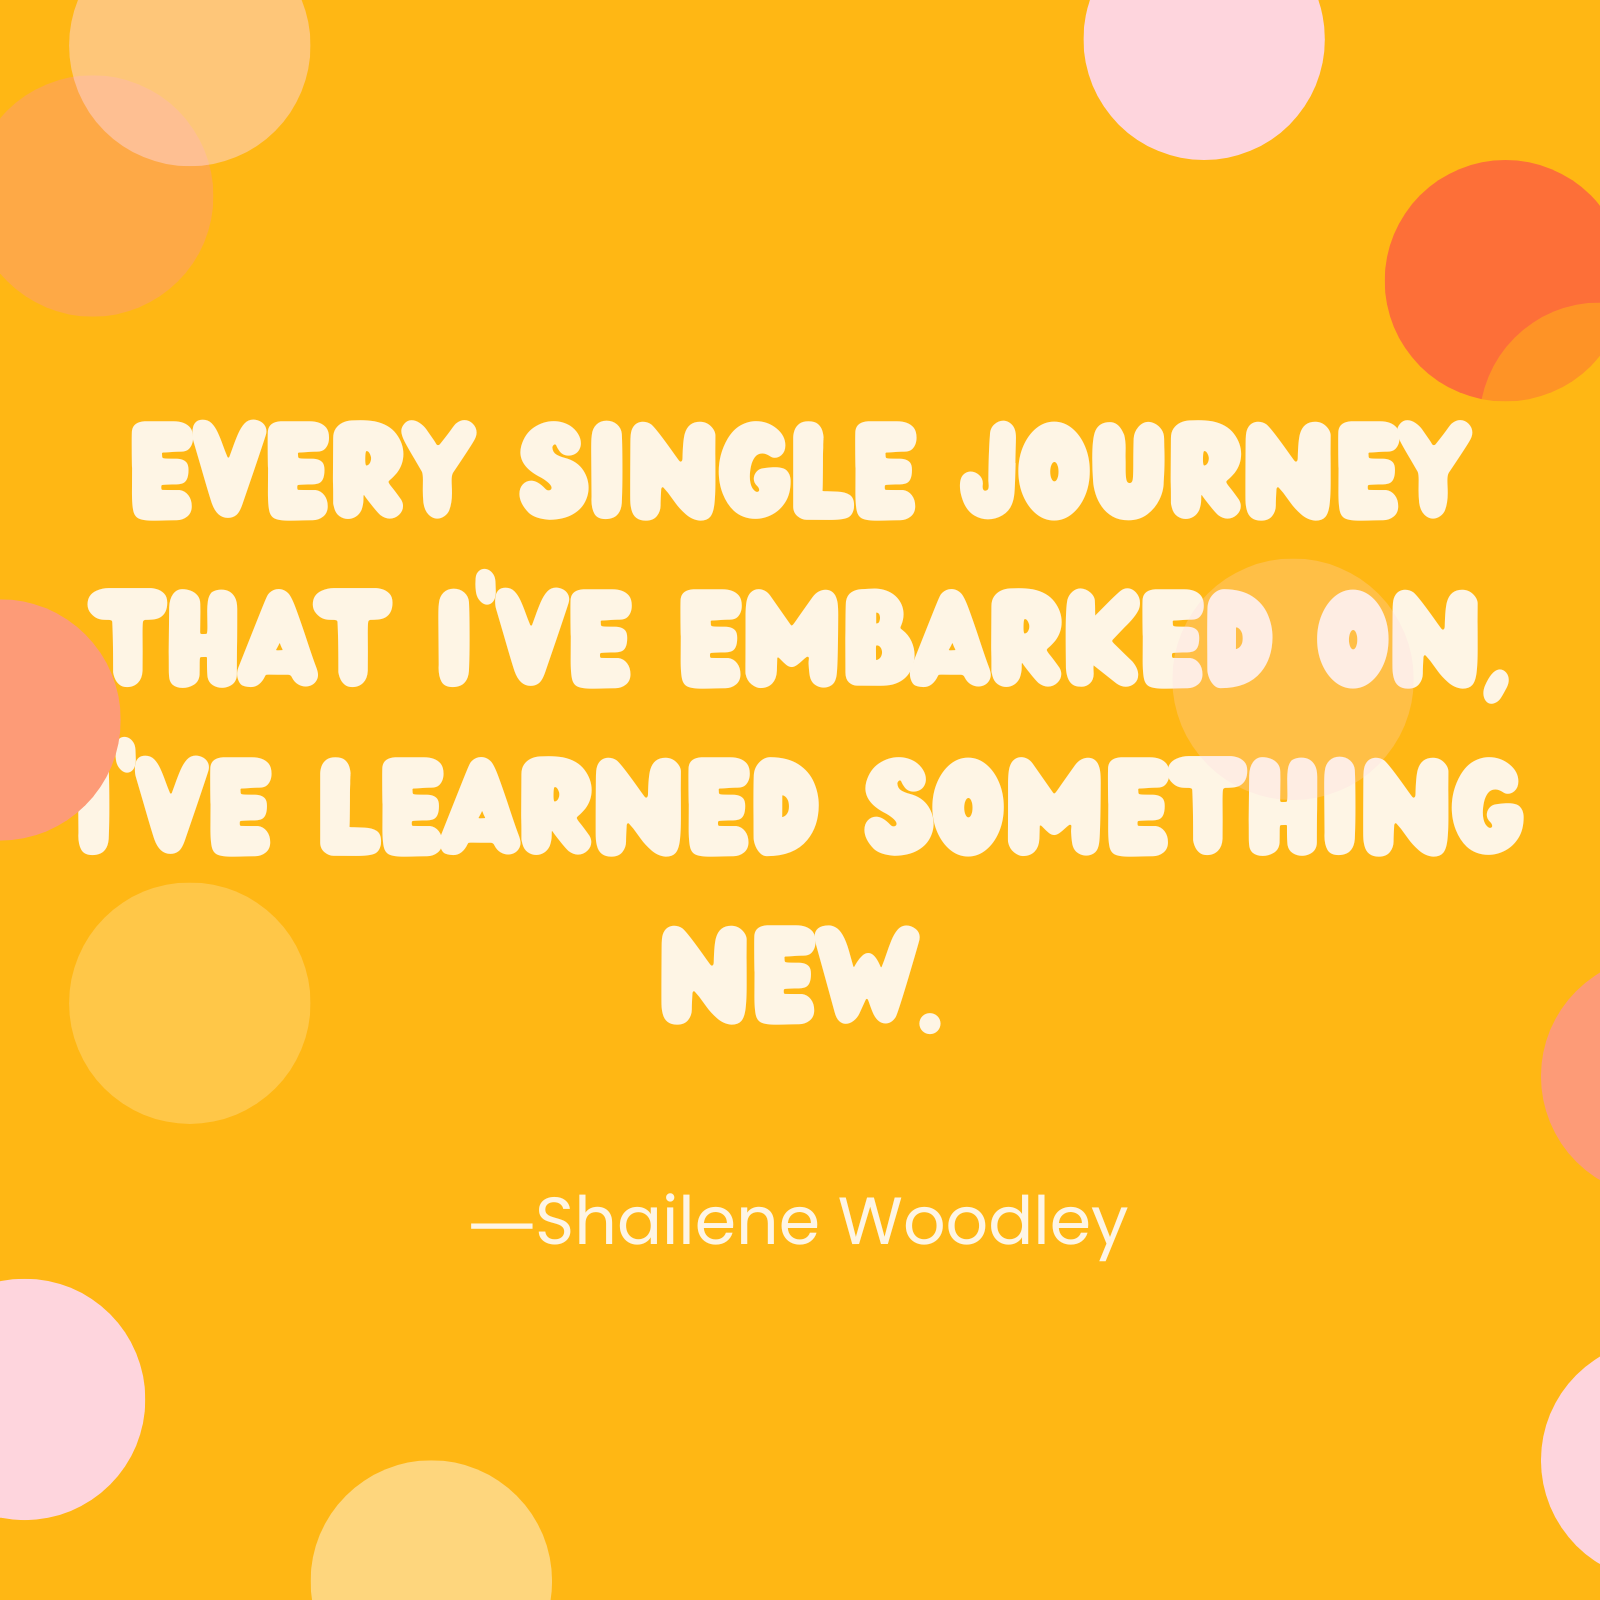 <p>"Every single journey that I've embarked on, I've learned something new." —Shailene Woodley</p>